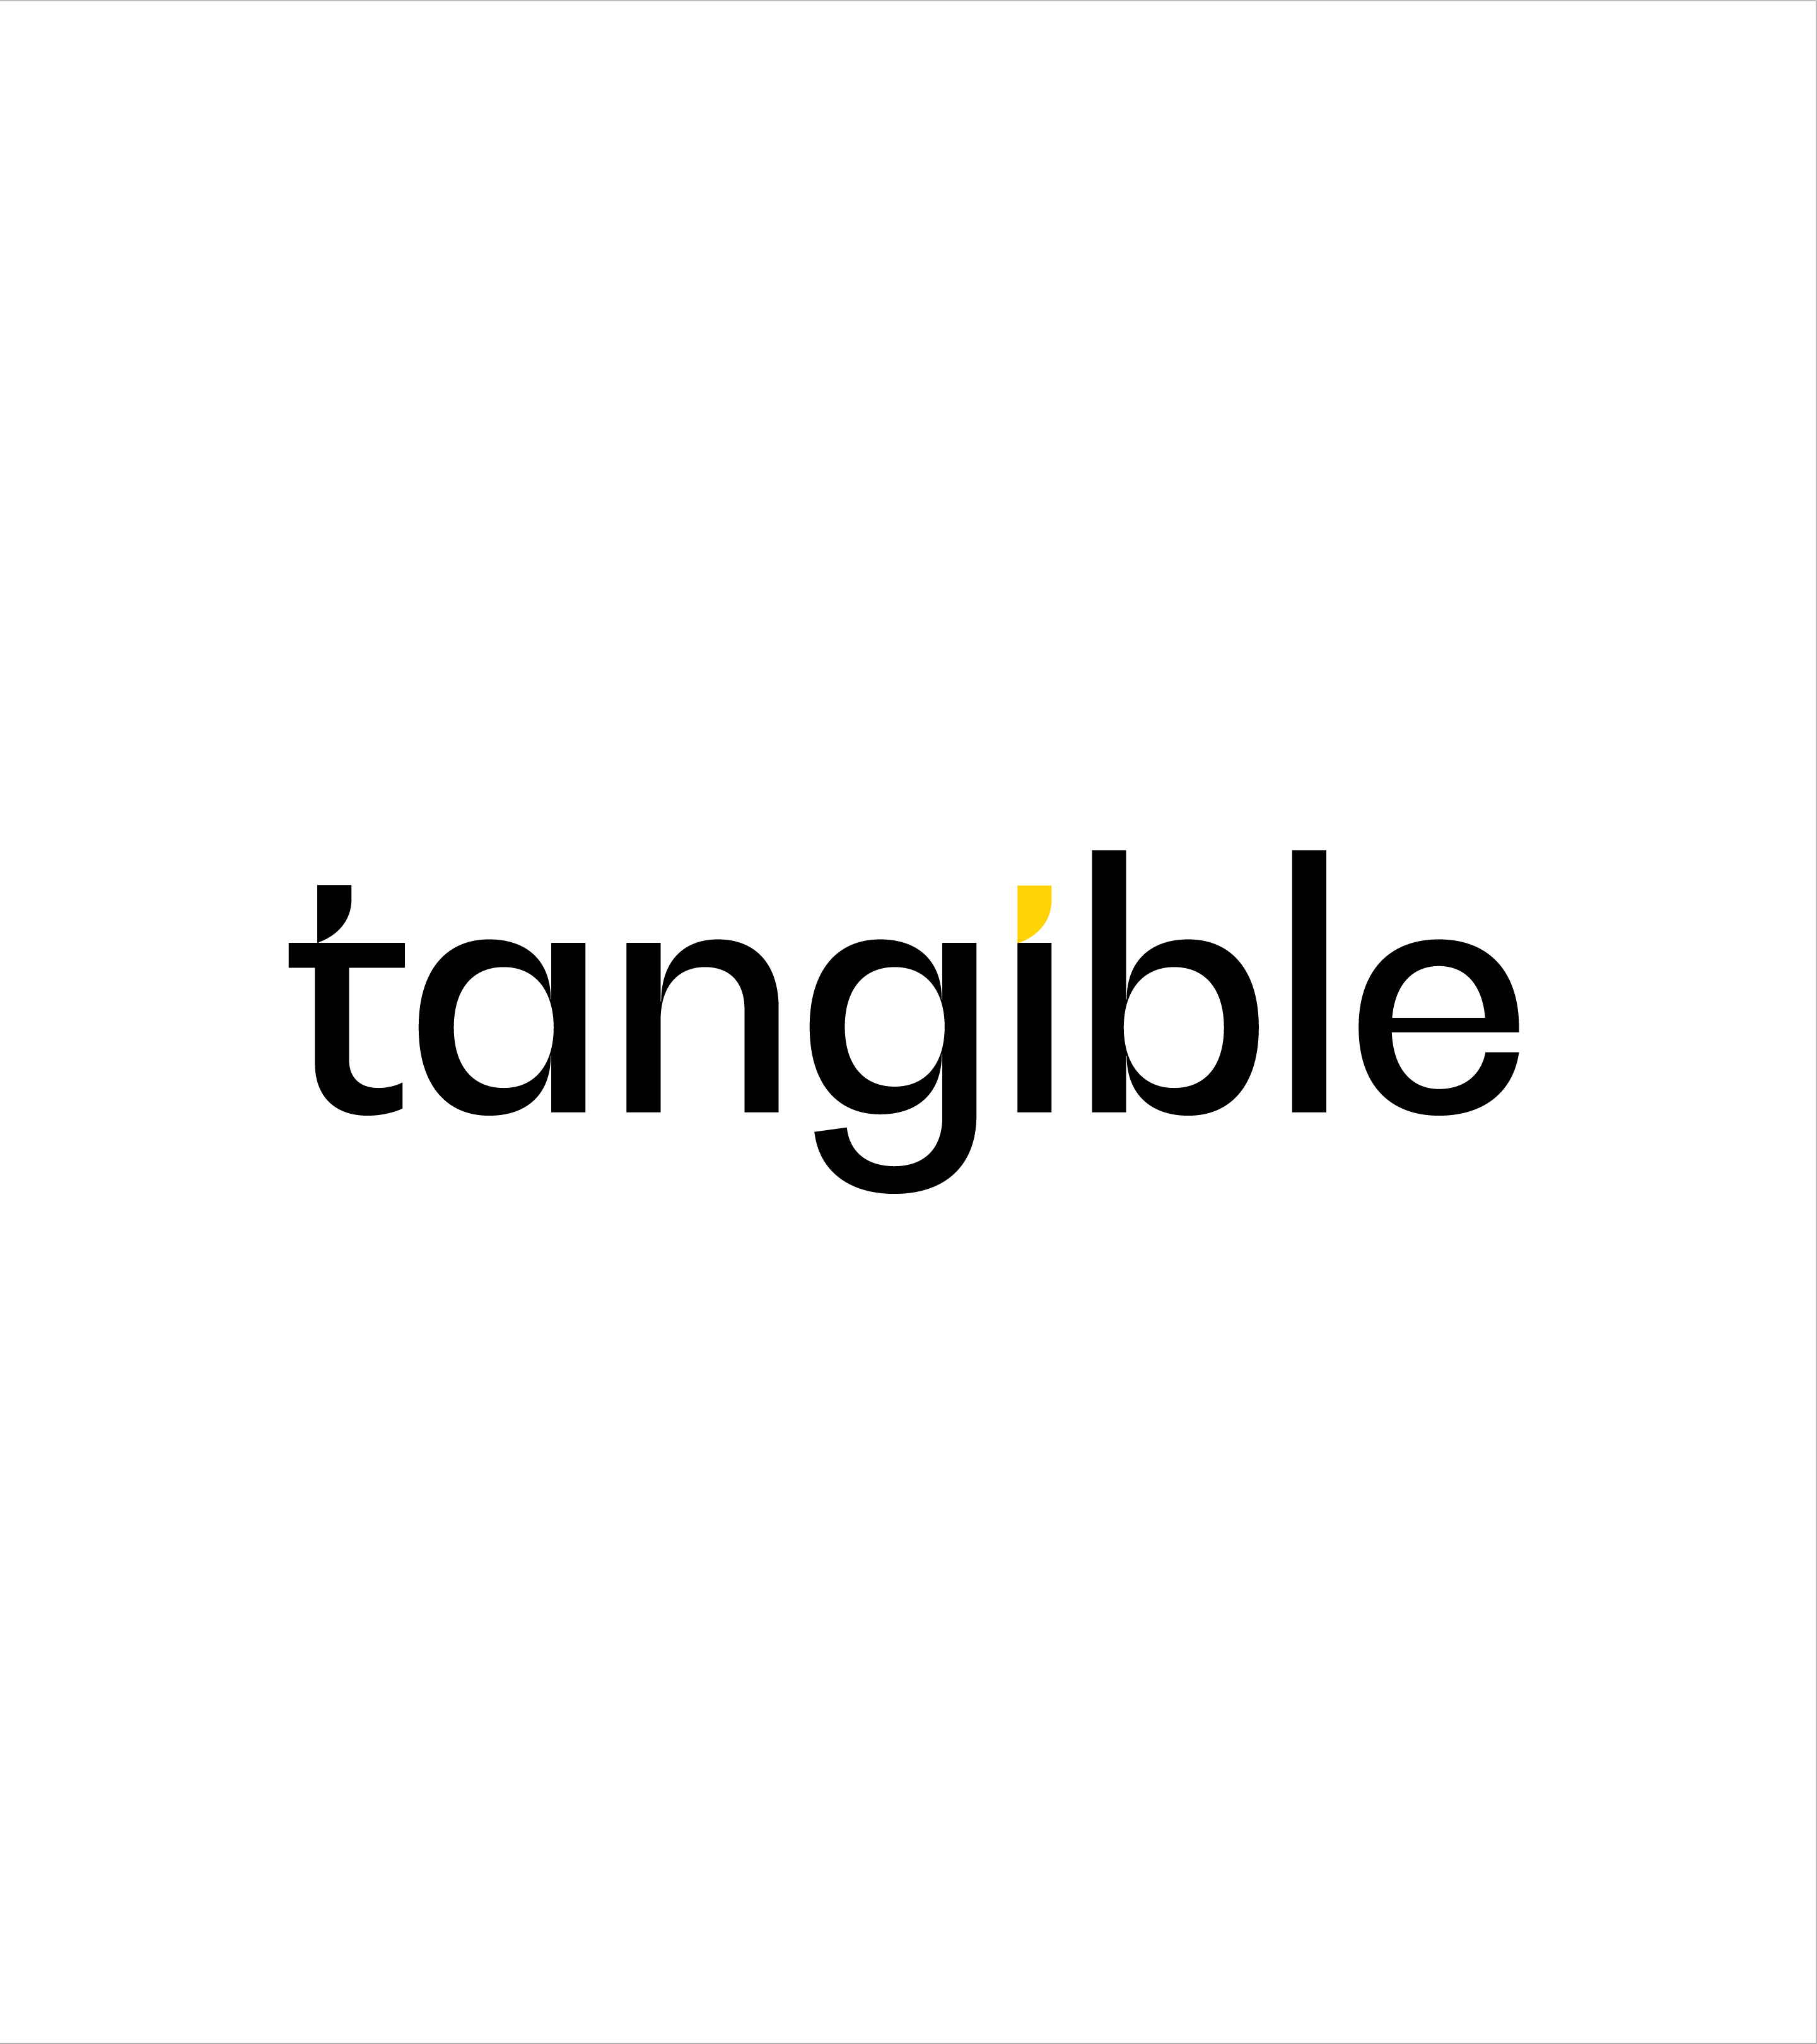 tangible-logo-a2b